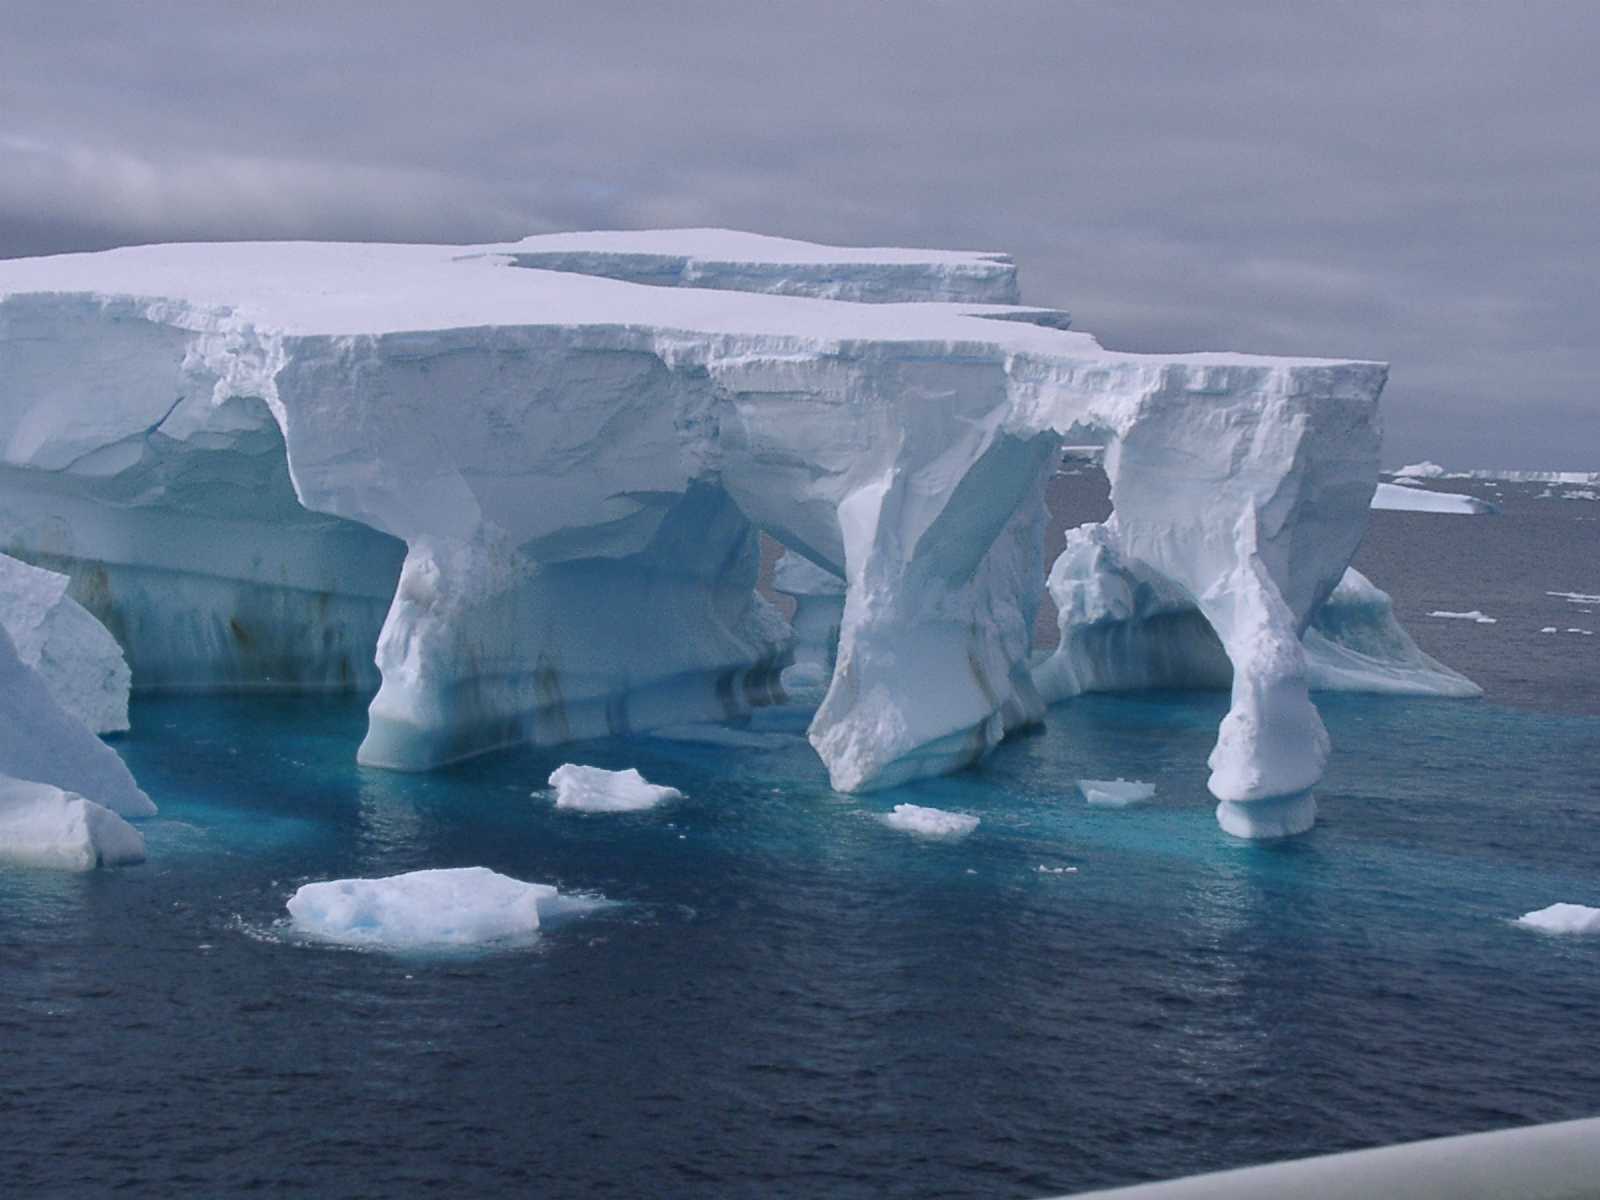 Материк антарктида: характеристики и описание континента, расположение территории и информации о земле